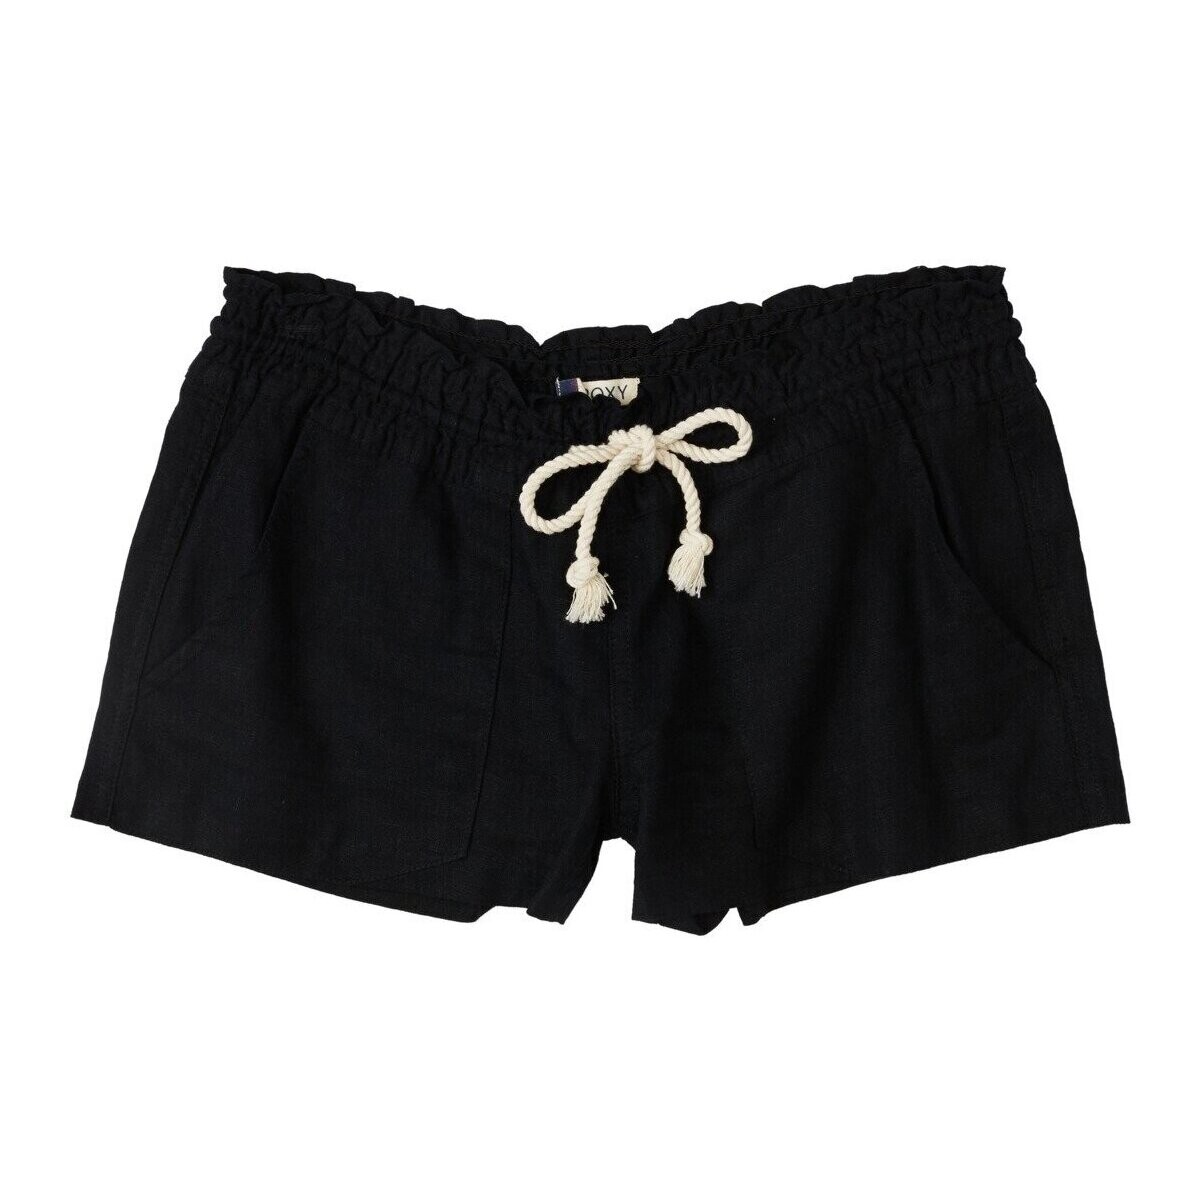 Vêtements Fille Shorts / Bermudas Roxy Oceanside Noir